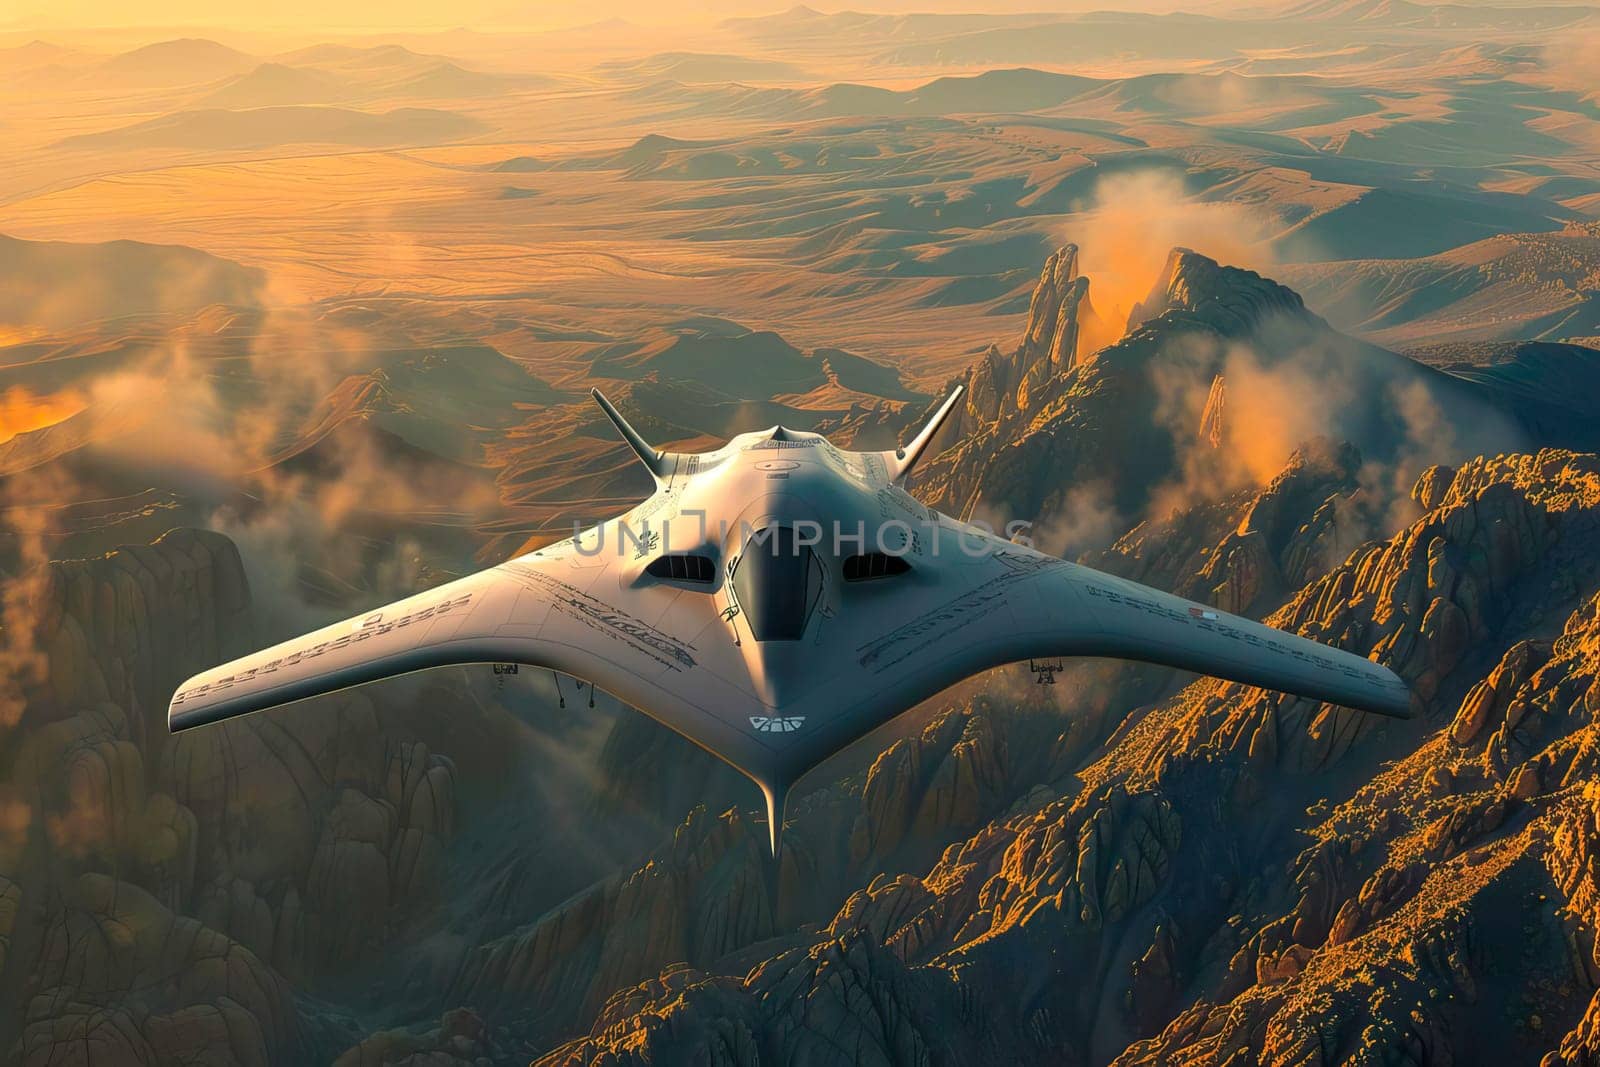 A military aircraft flies over a vast desert landscape under a clear sky.